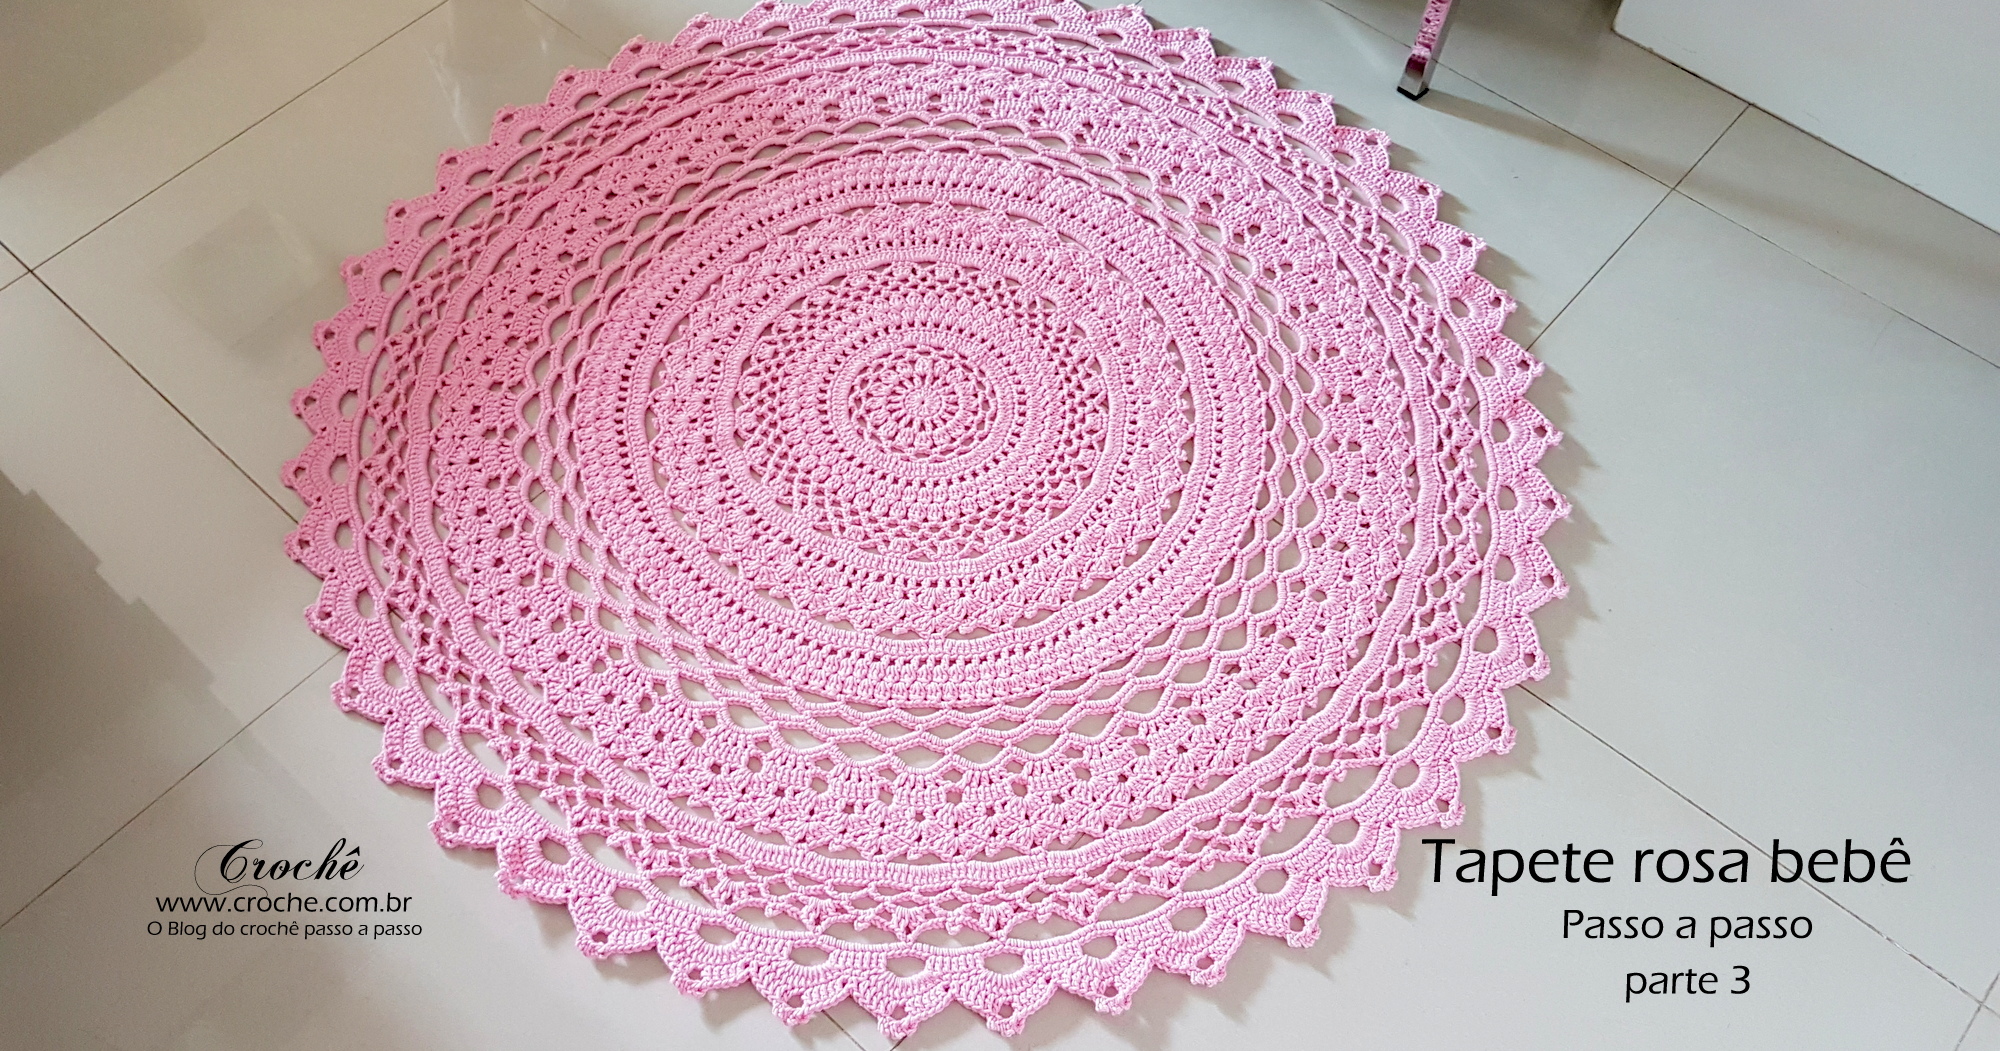 health Broom Striped Tapete rosa bebê – Passo a passo parte 3 | Croche.com.br